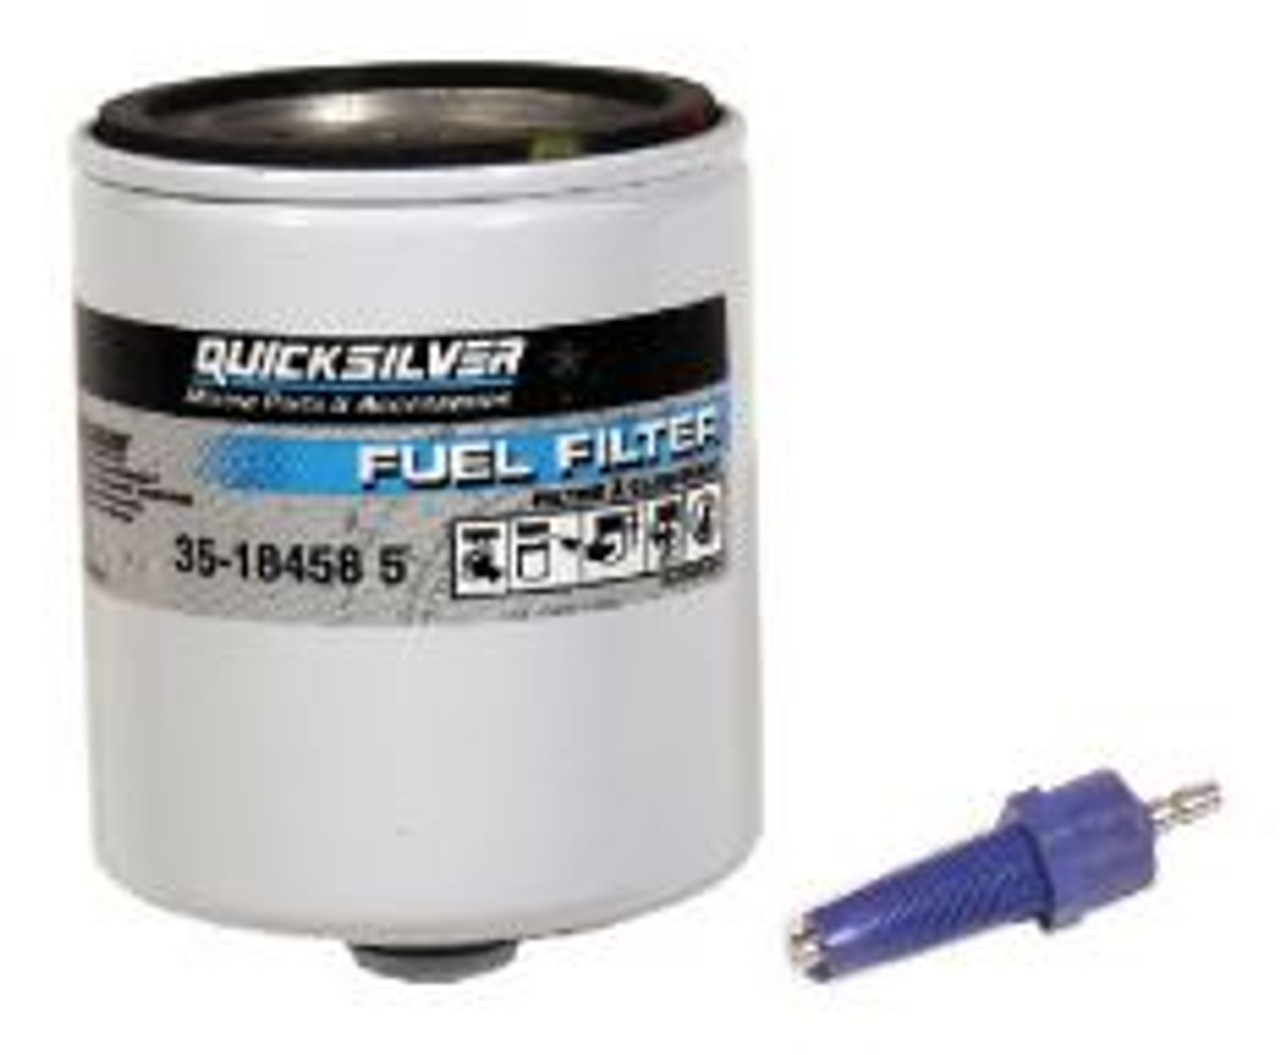 Quicksilver New OEM Water Separating Fuel Filter, 35-18458Q4